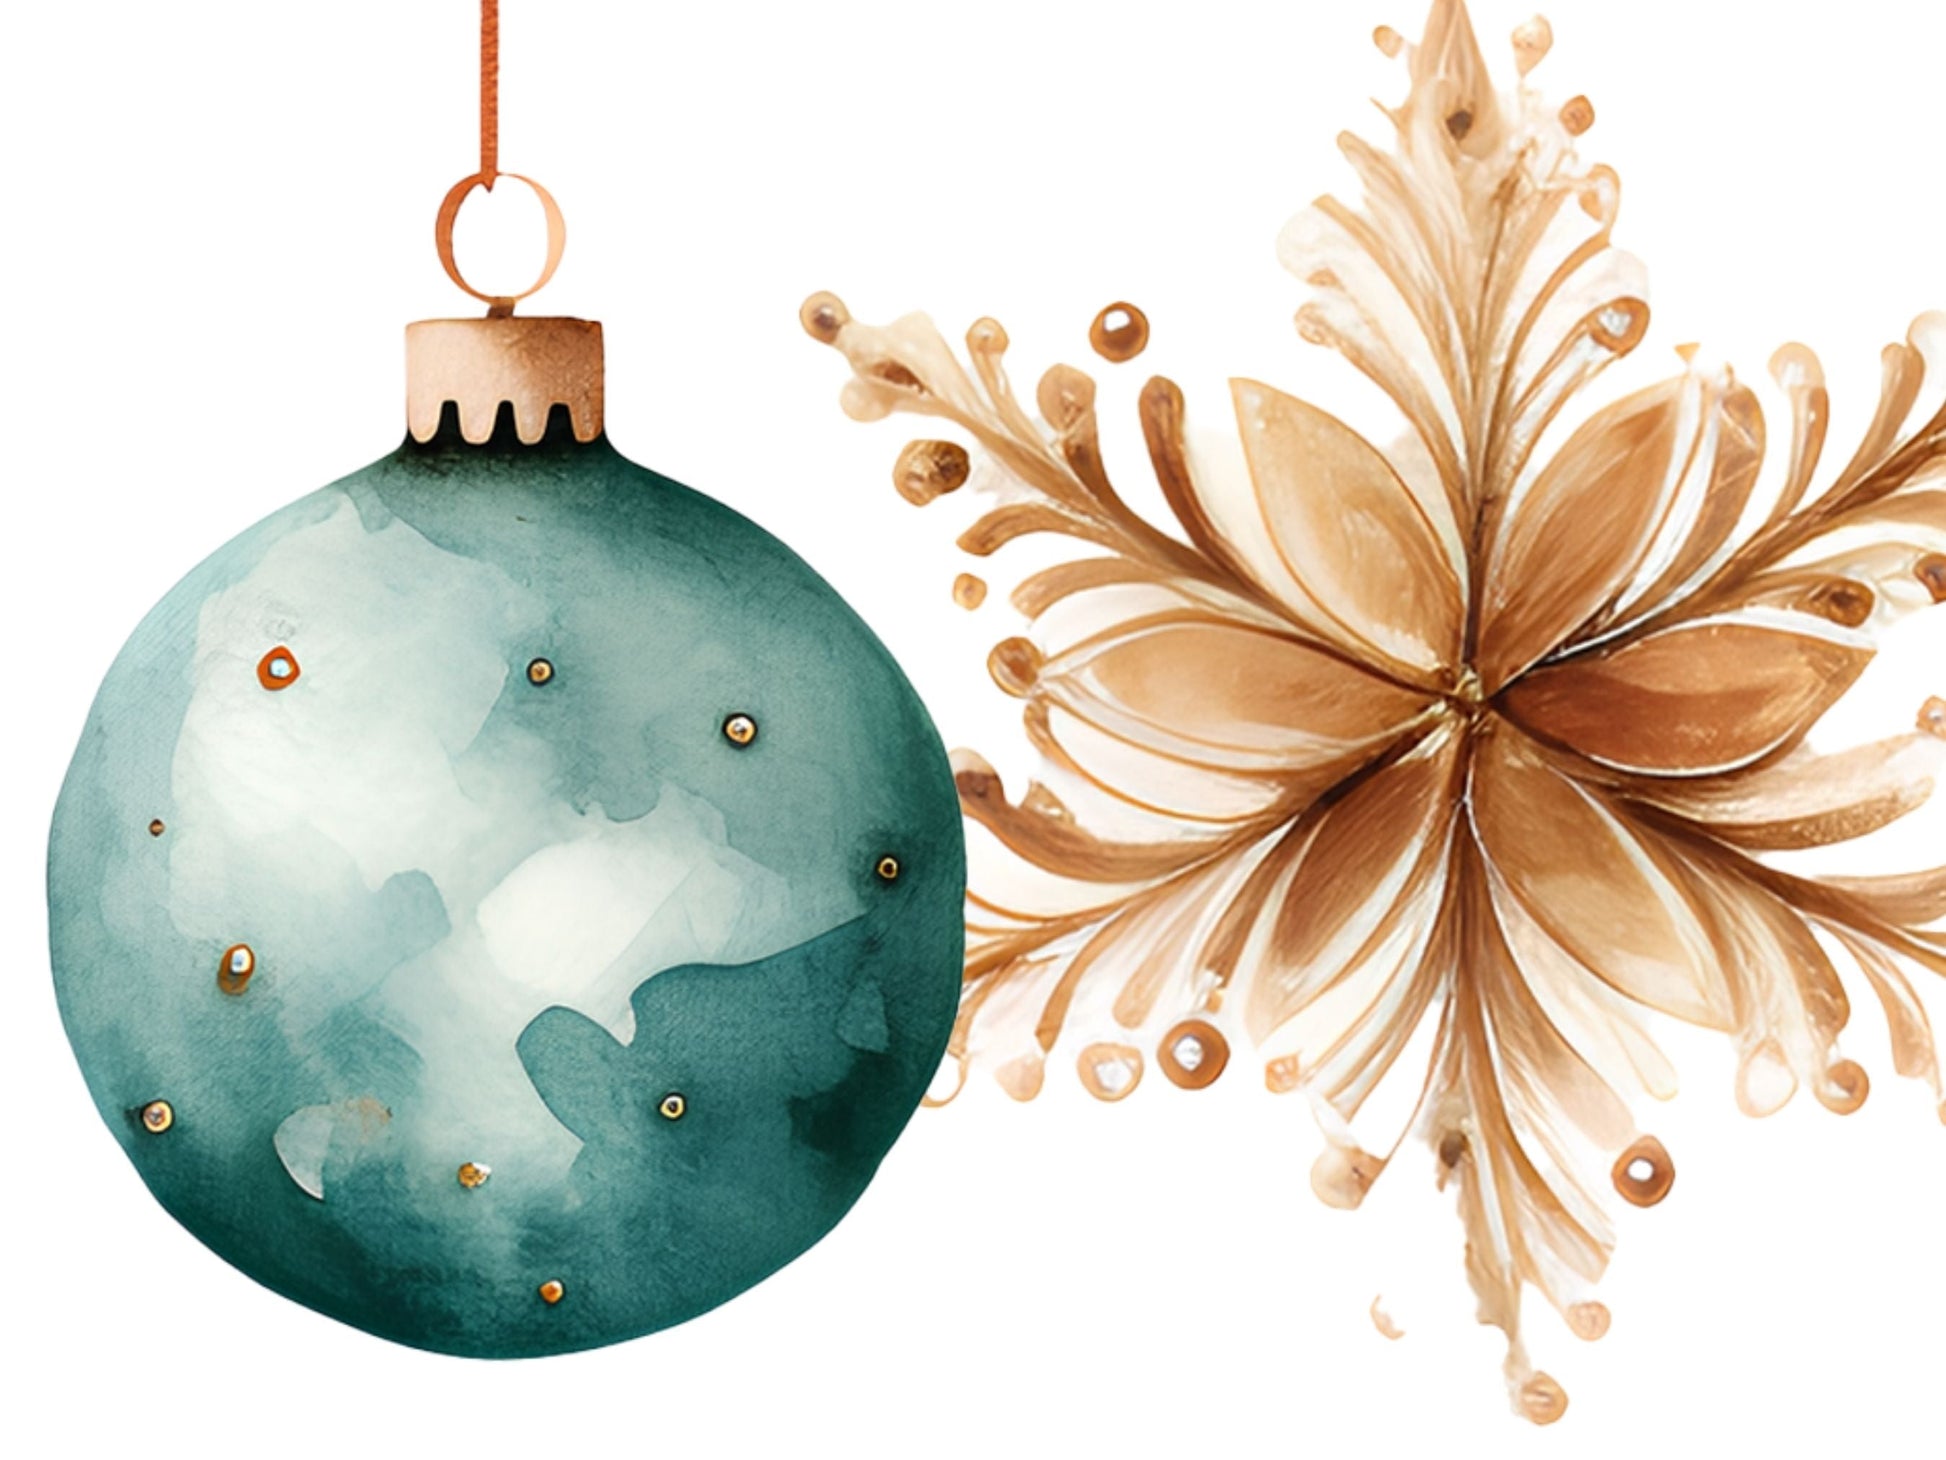 Watercolor Christmas Ornaments PNG Cliparts - Digital Artwork - Mama Life Printables